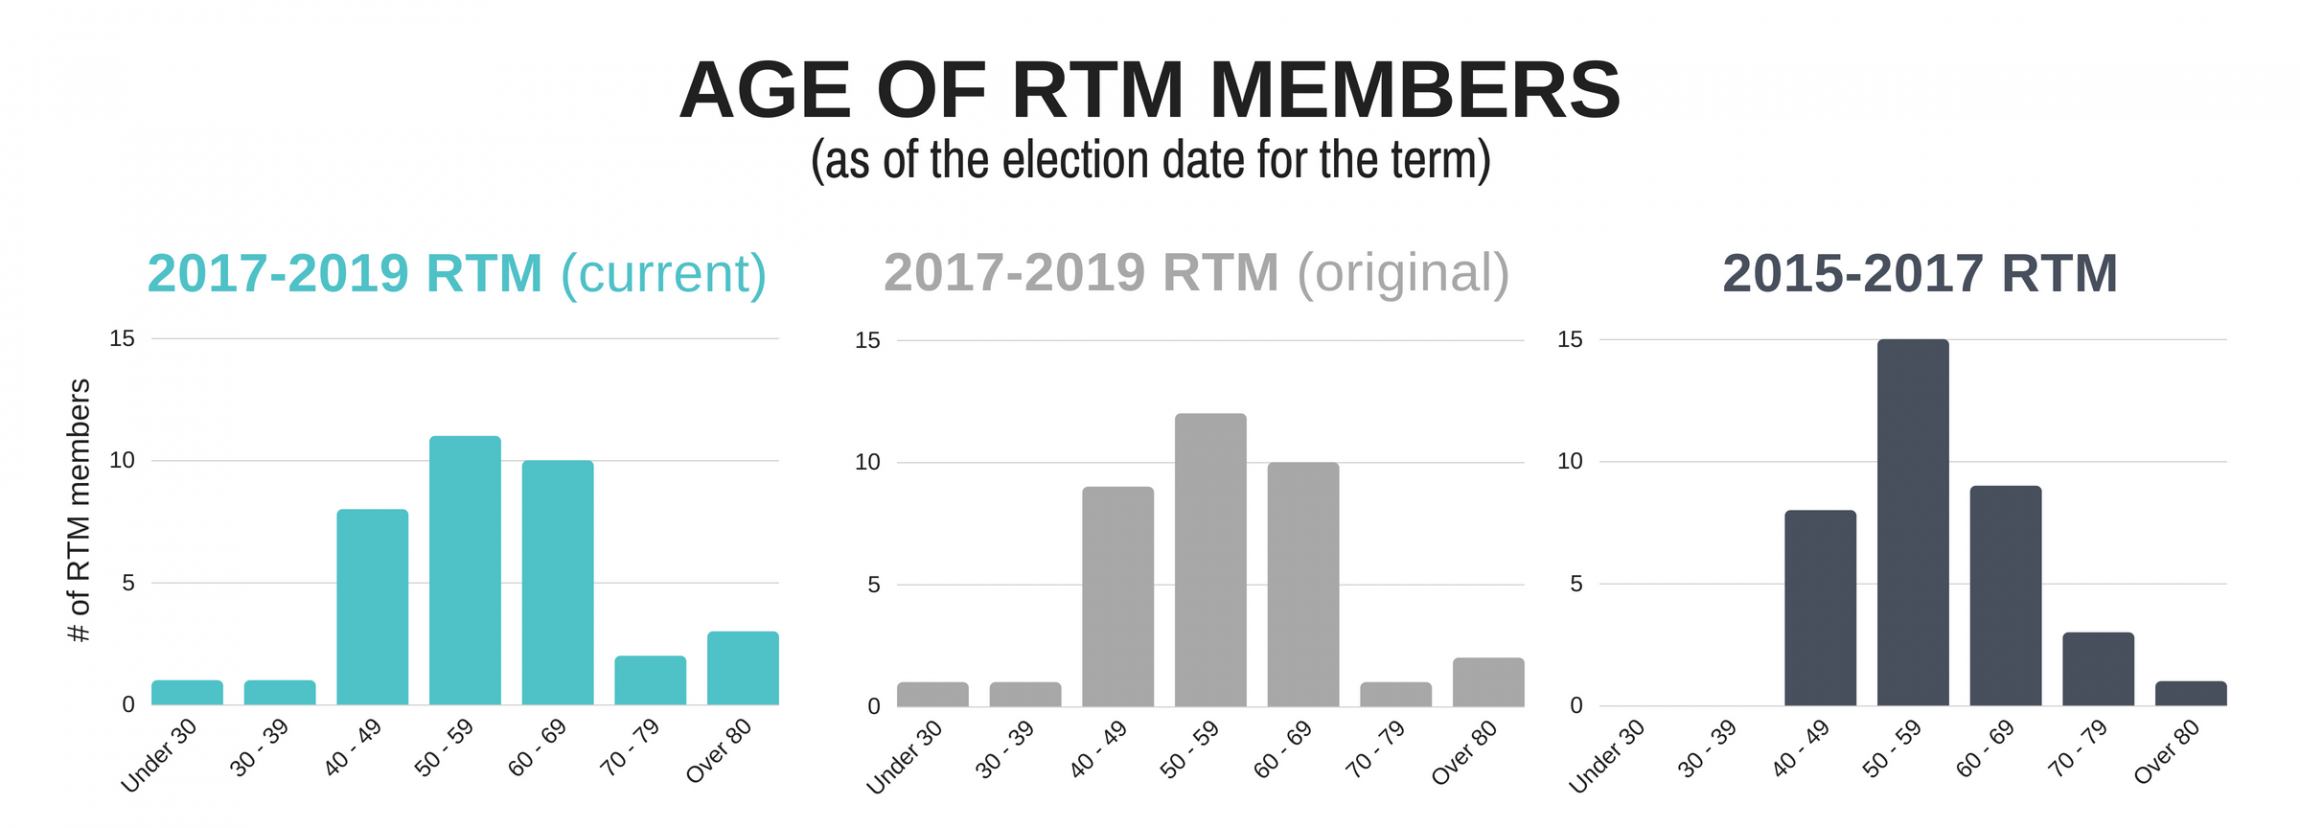 # of RTM members (2)